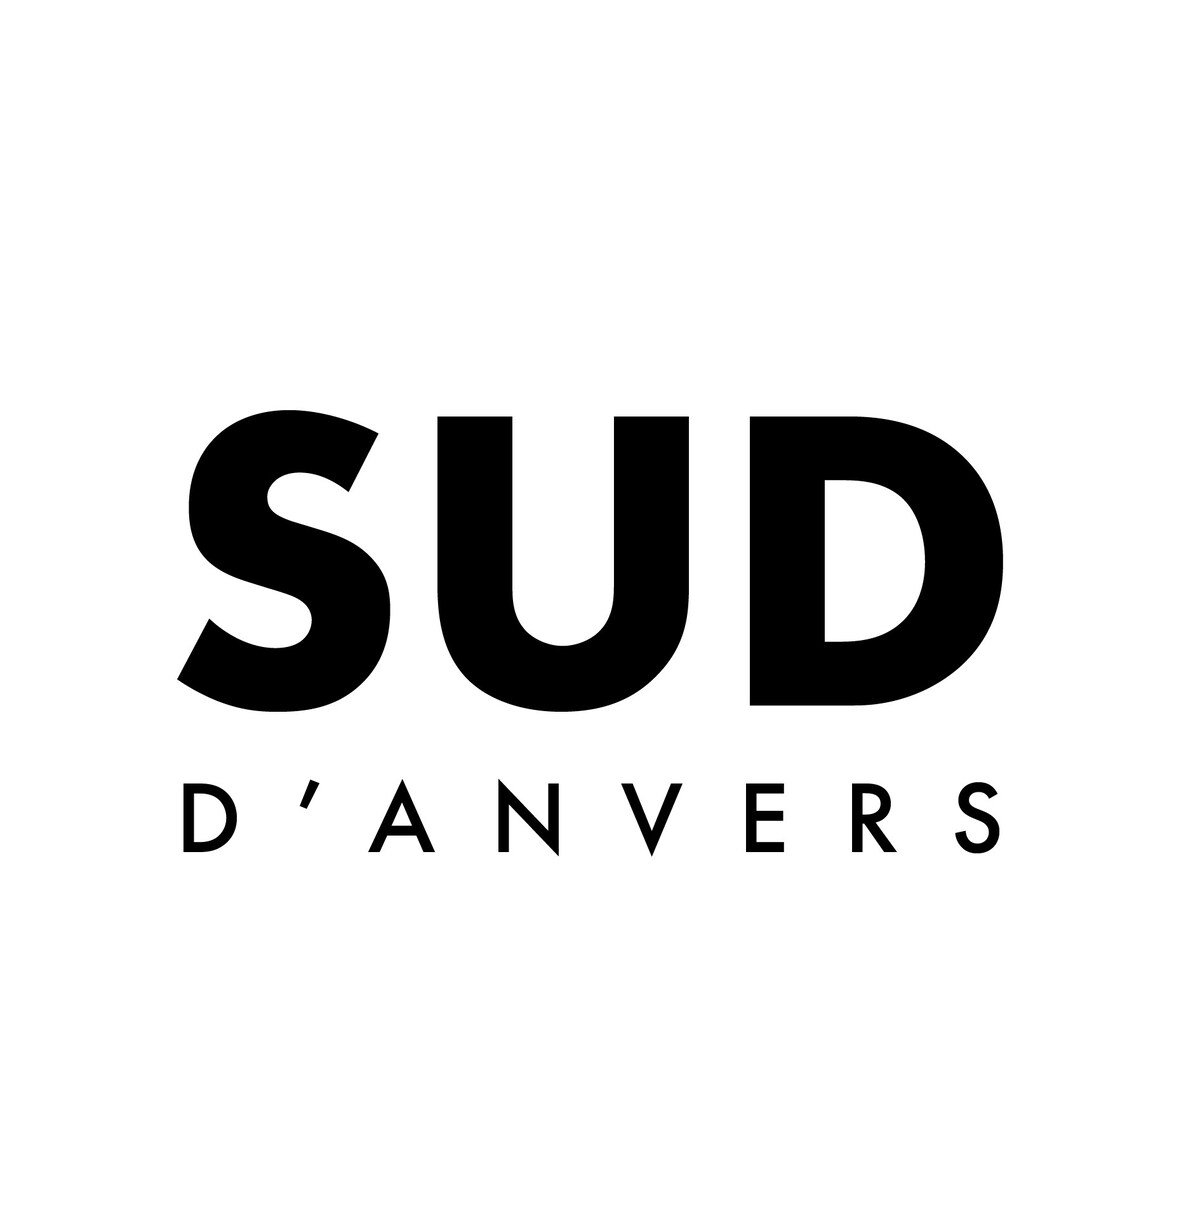 "Sud d 'Anvers"
精品复式公寓
"Steiner"